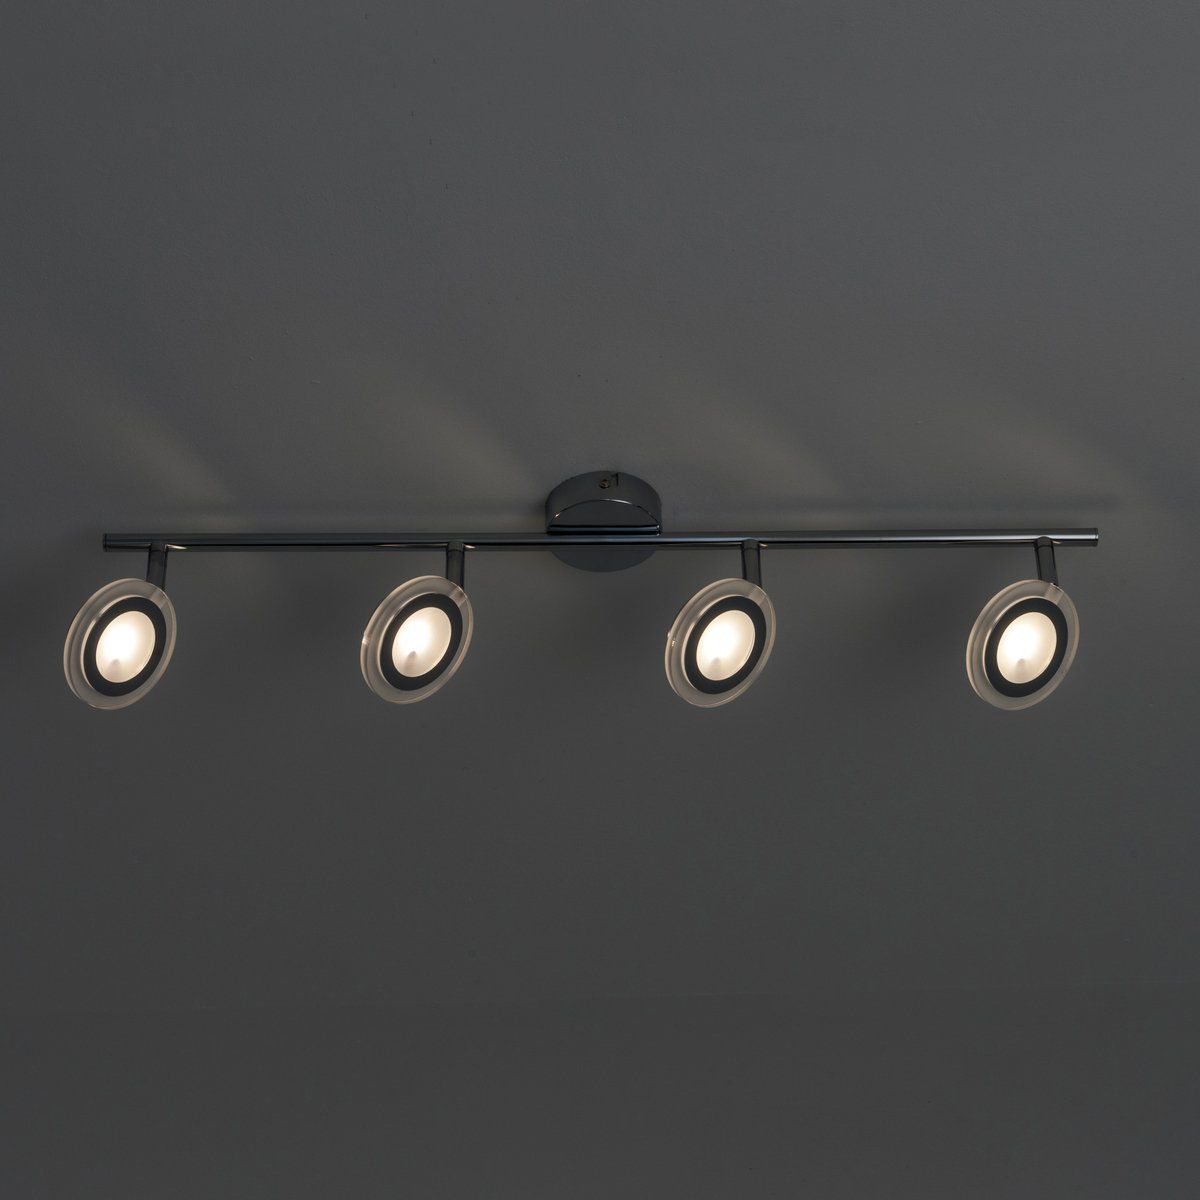 Réglette 4 spots LED orientables LYZA argentée en métal